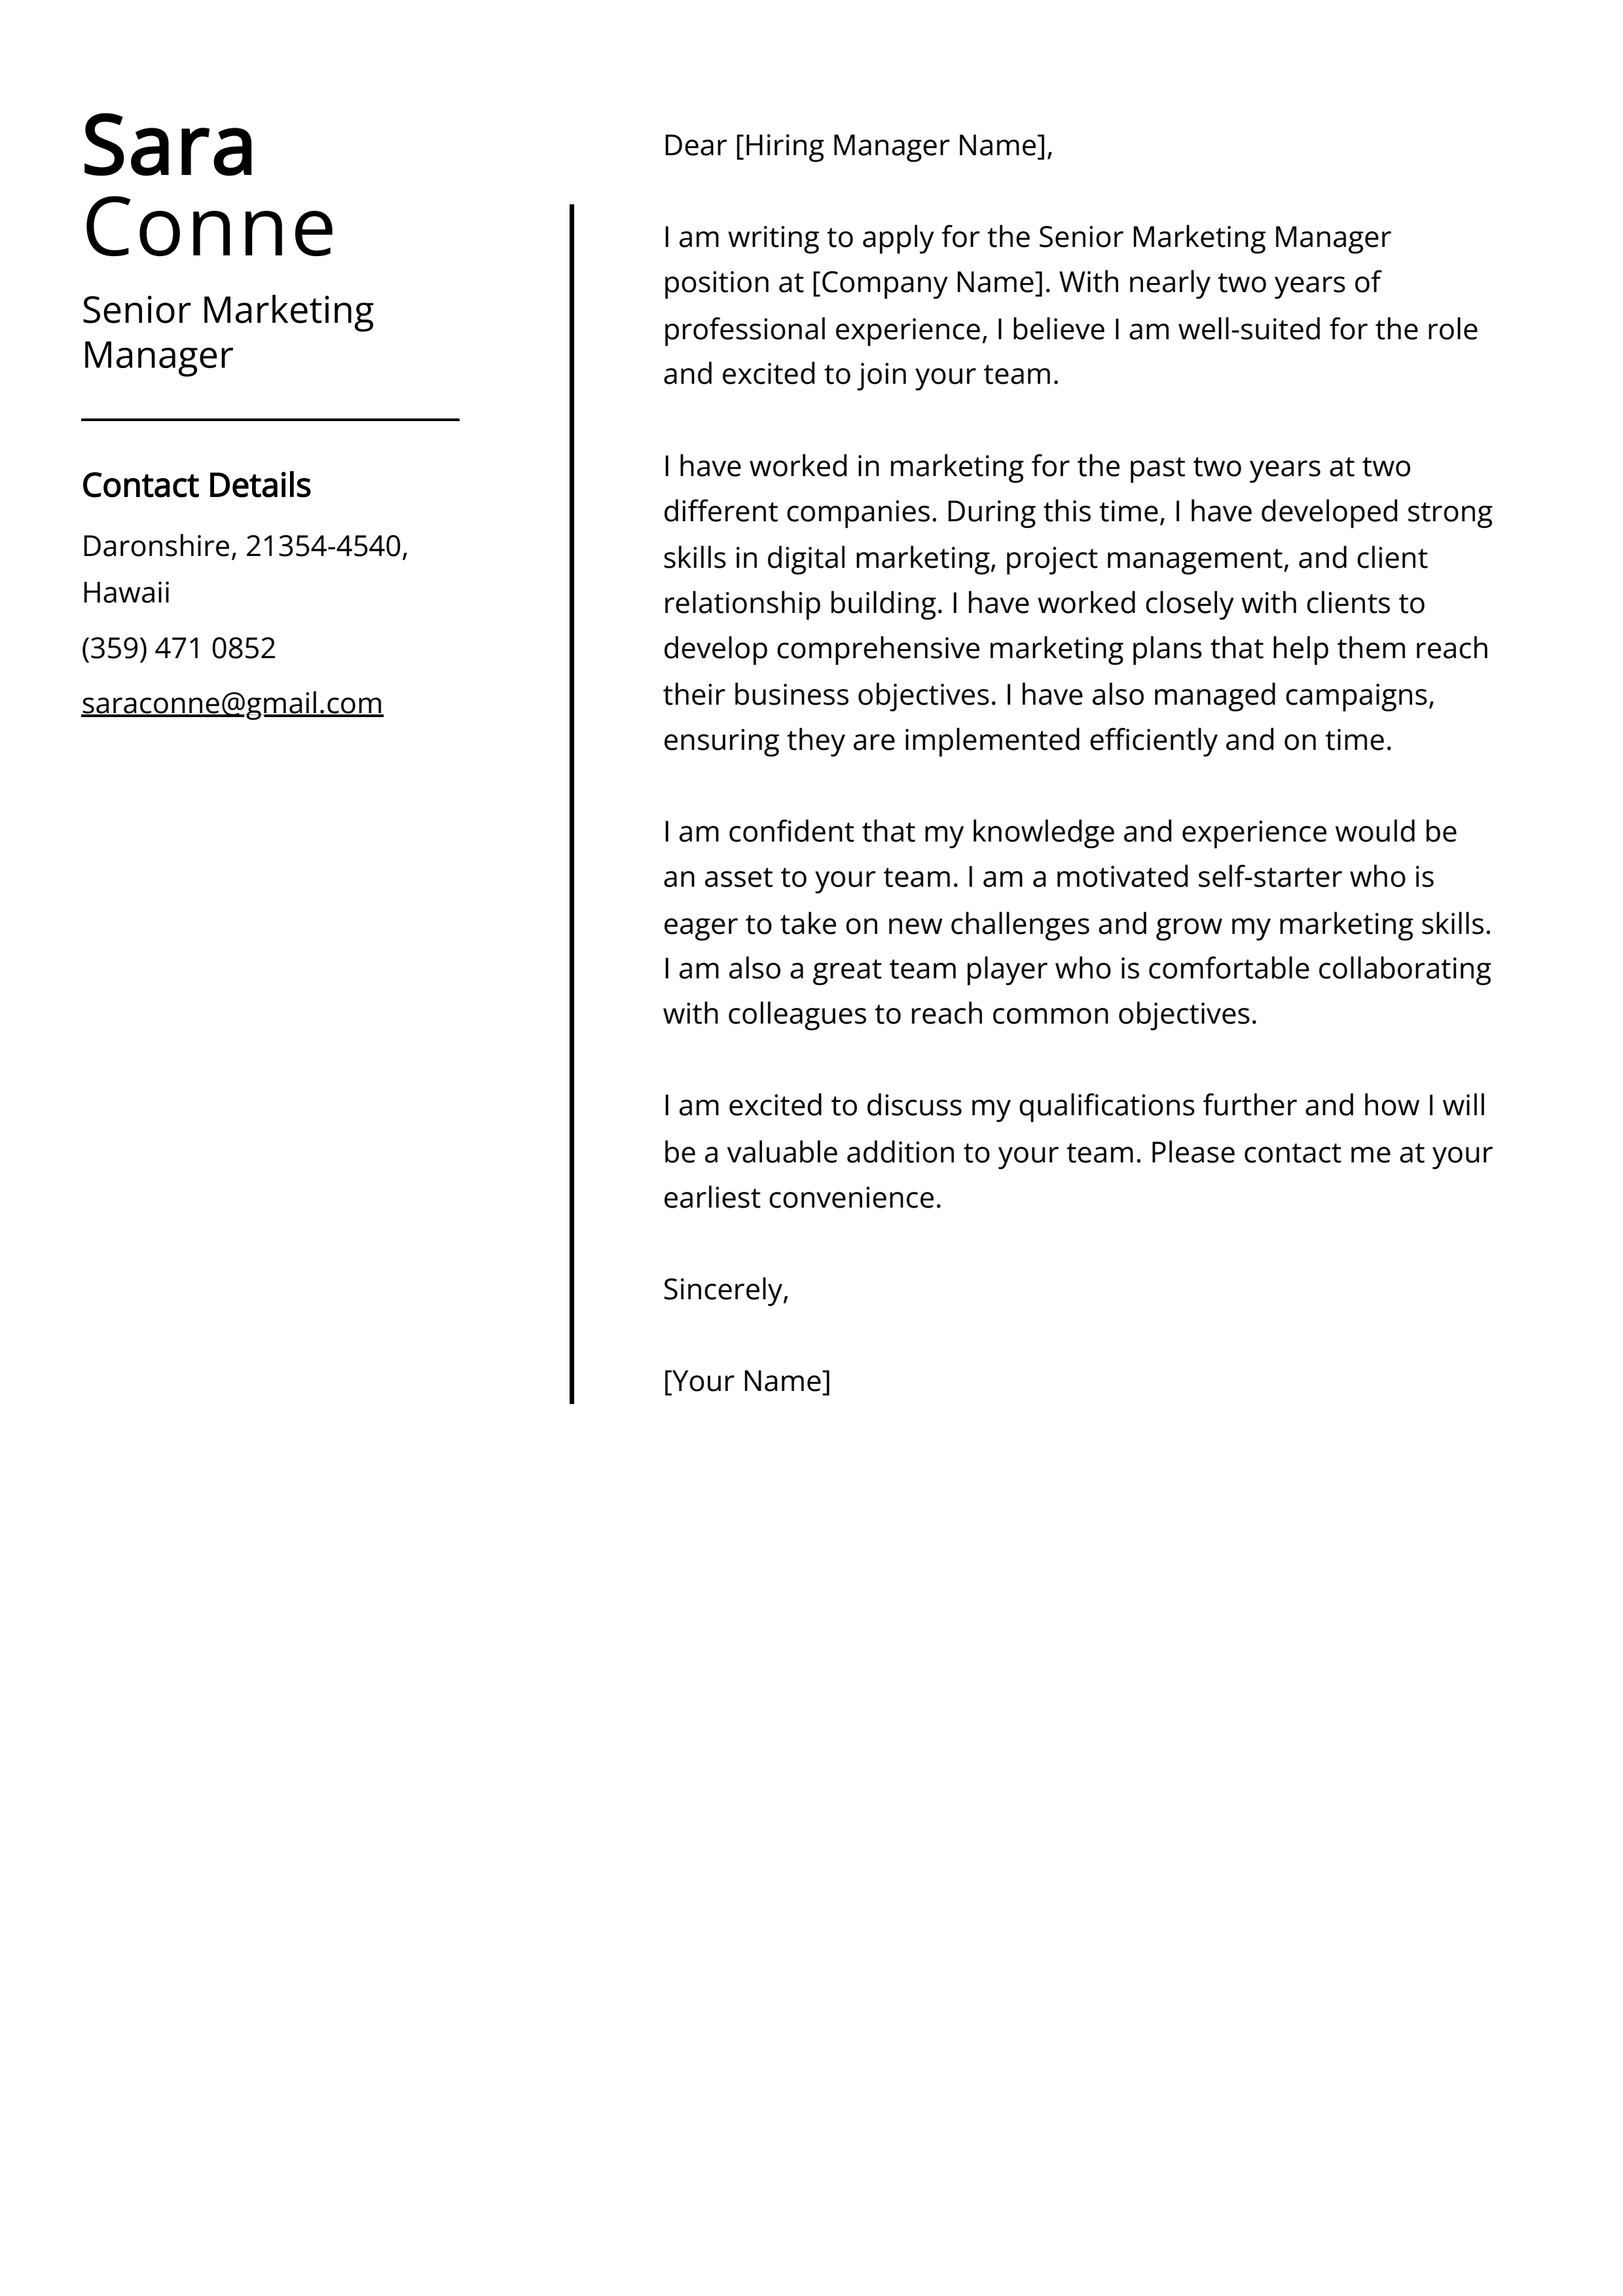 Senior Marketing Manager Cover Letter Example